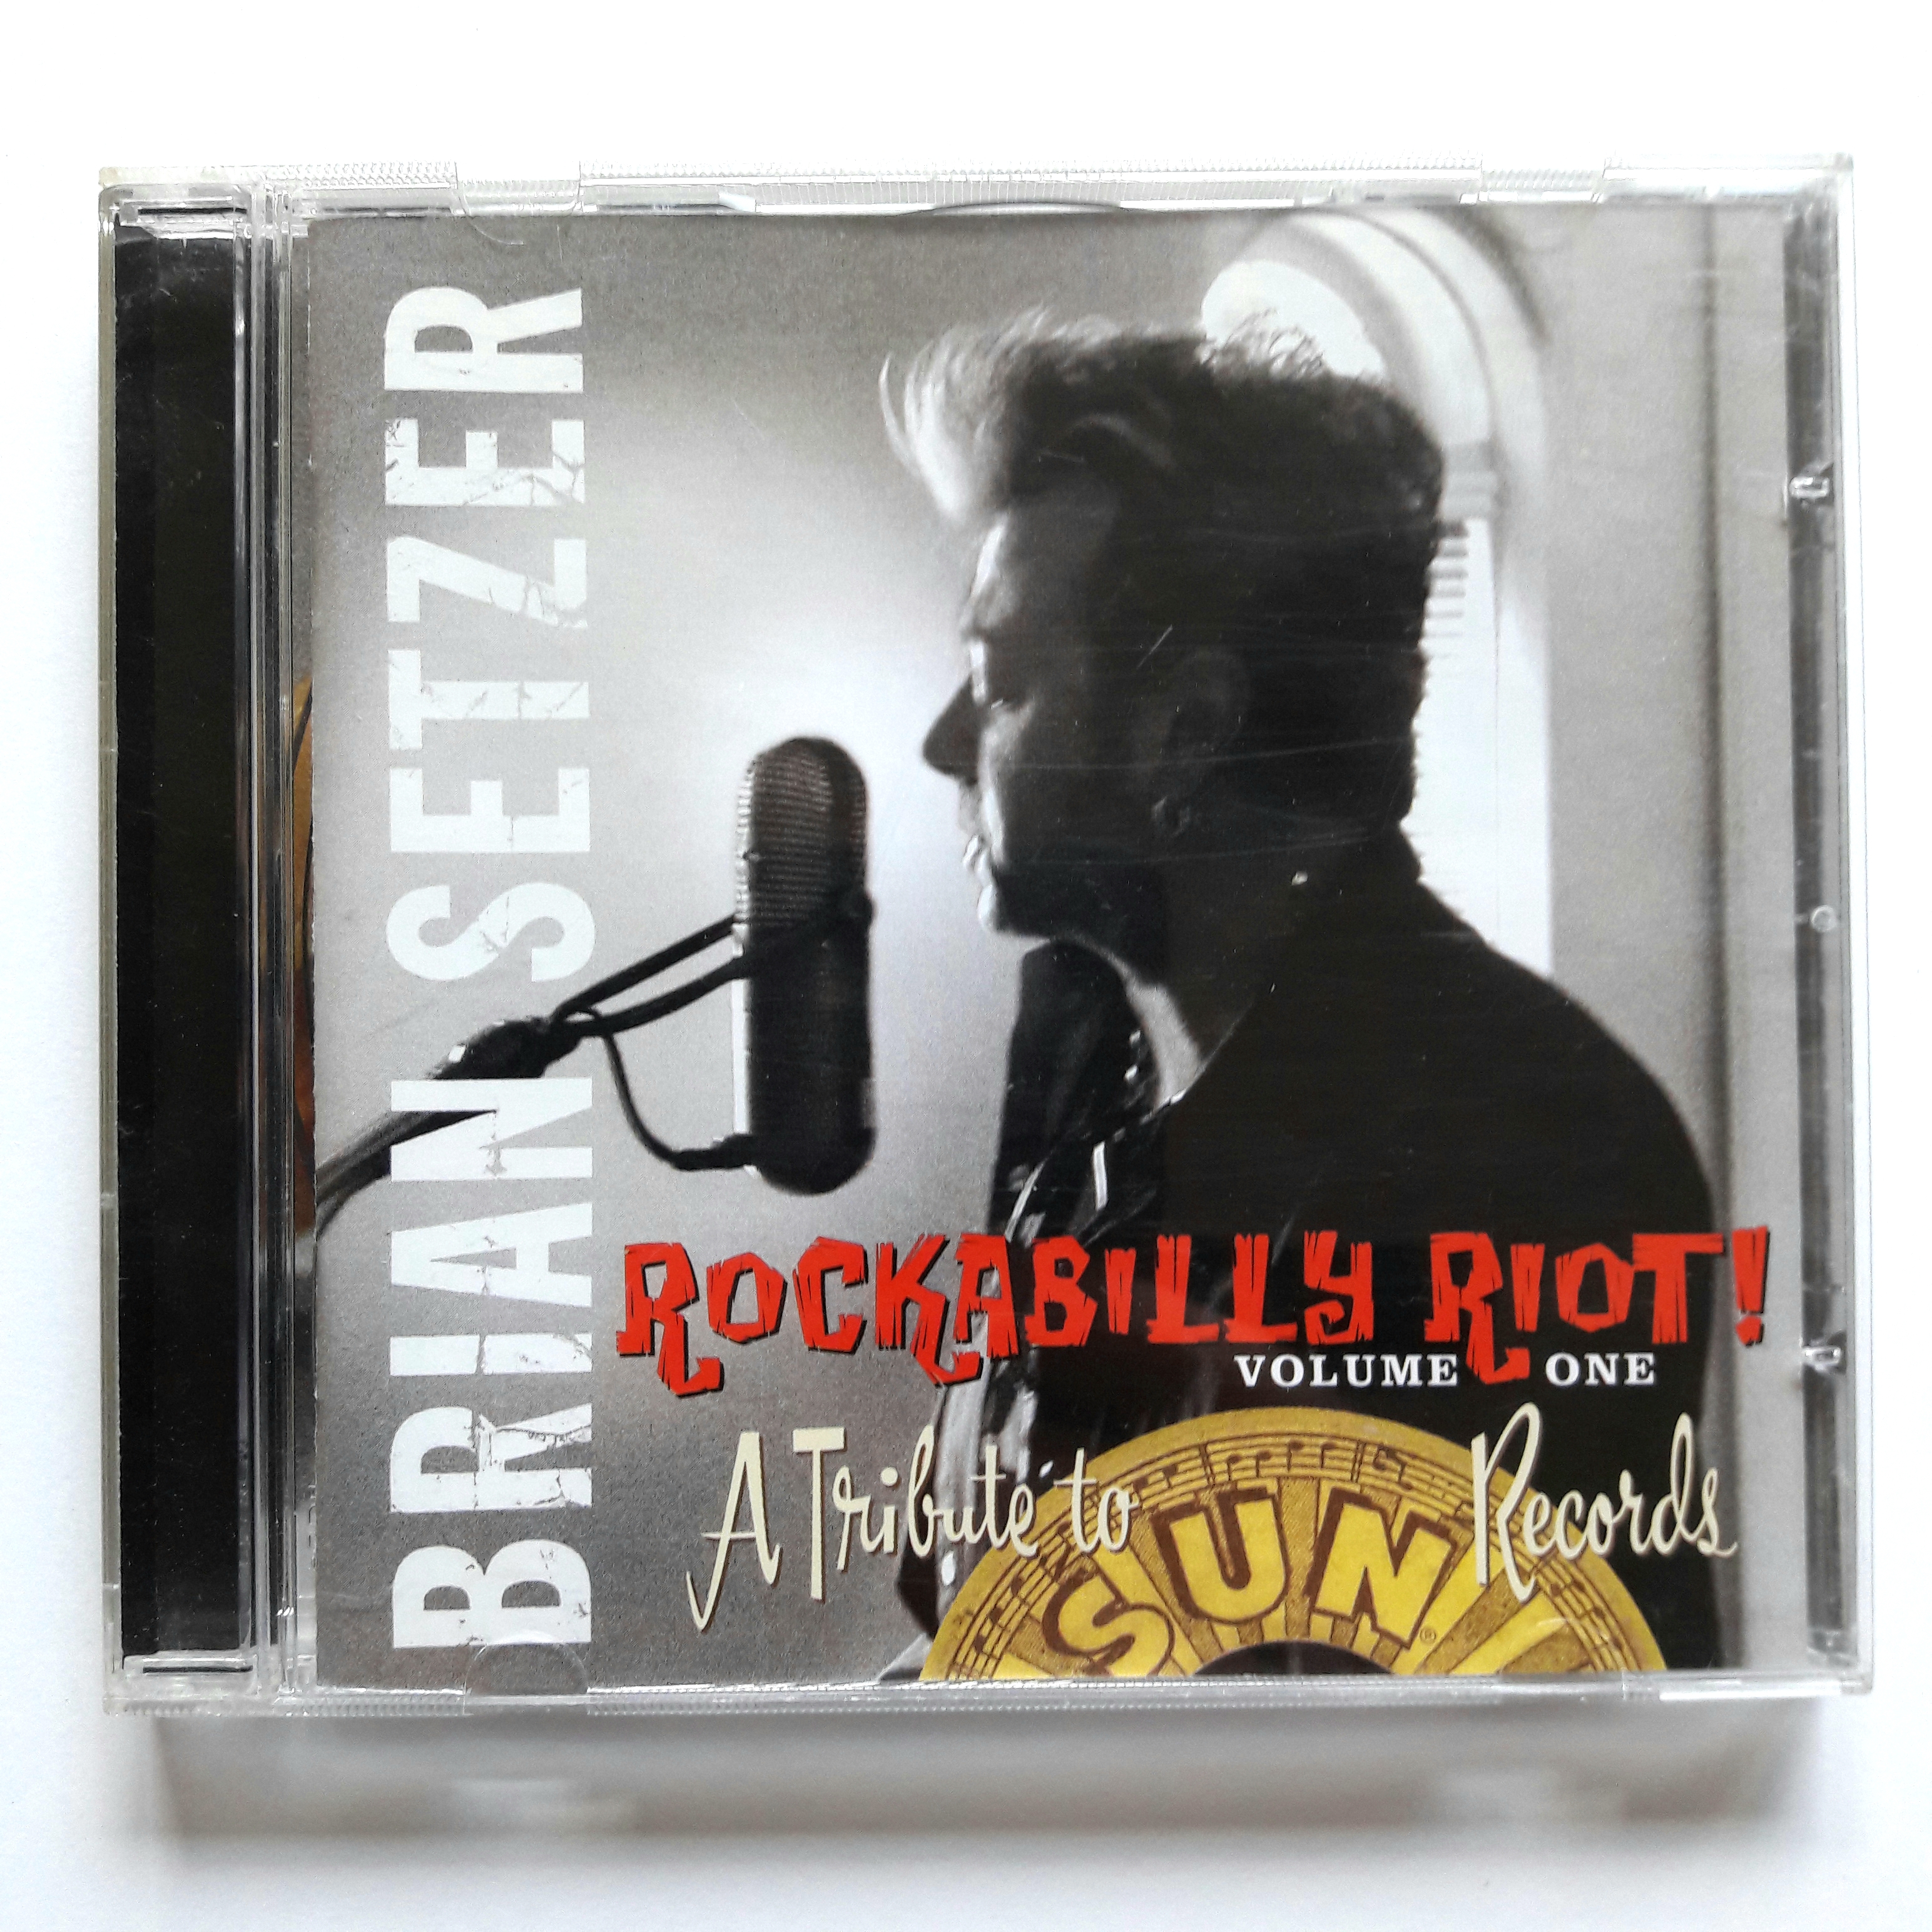 Brian Setzer - Rockabilly Riot! vol. one